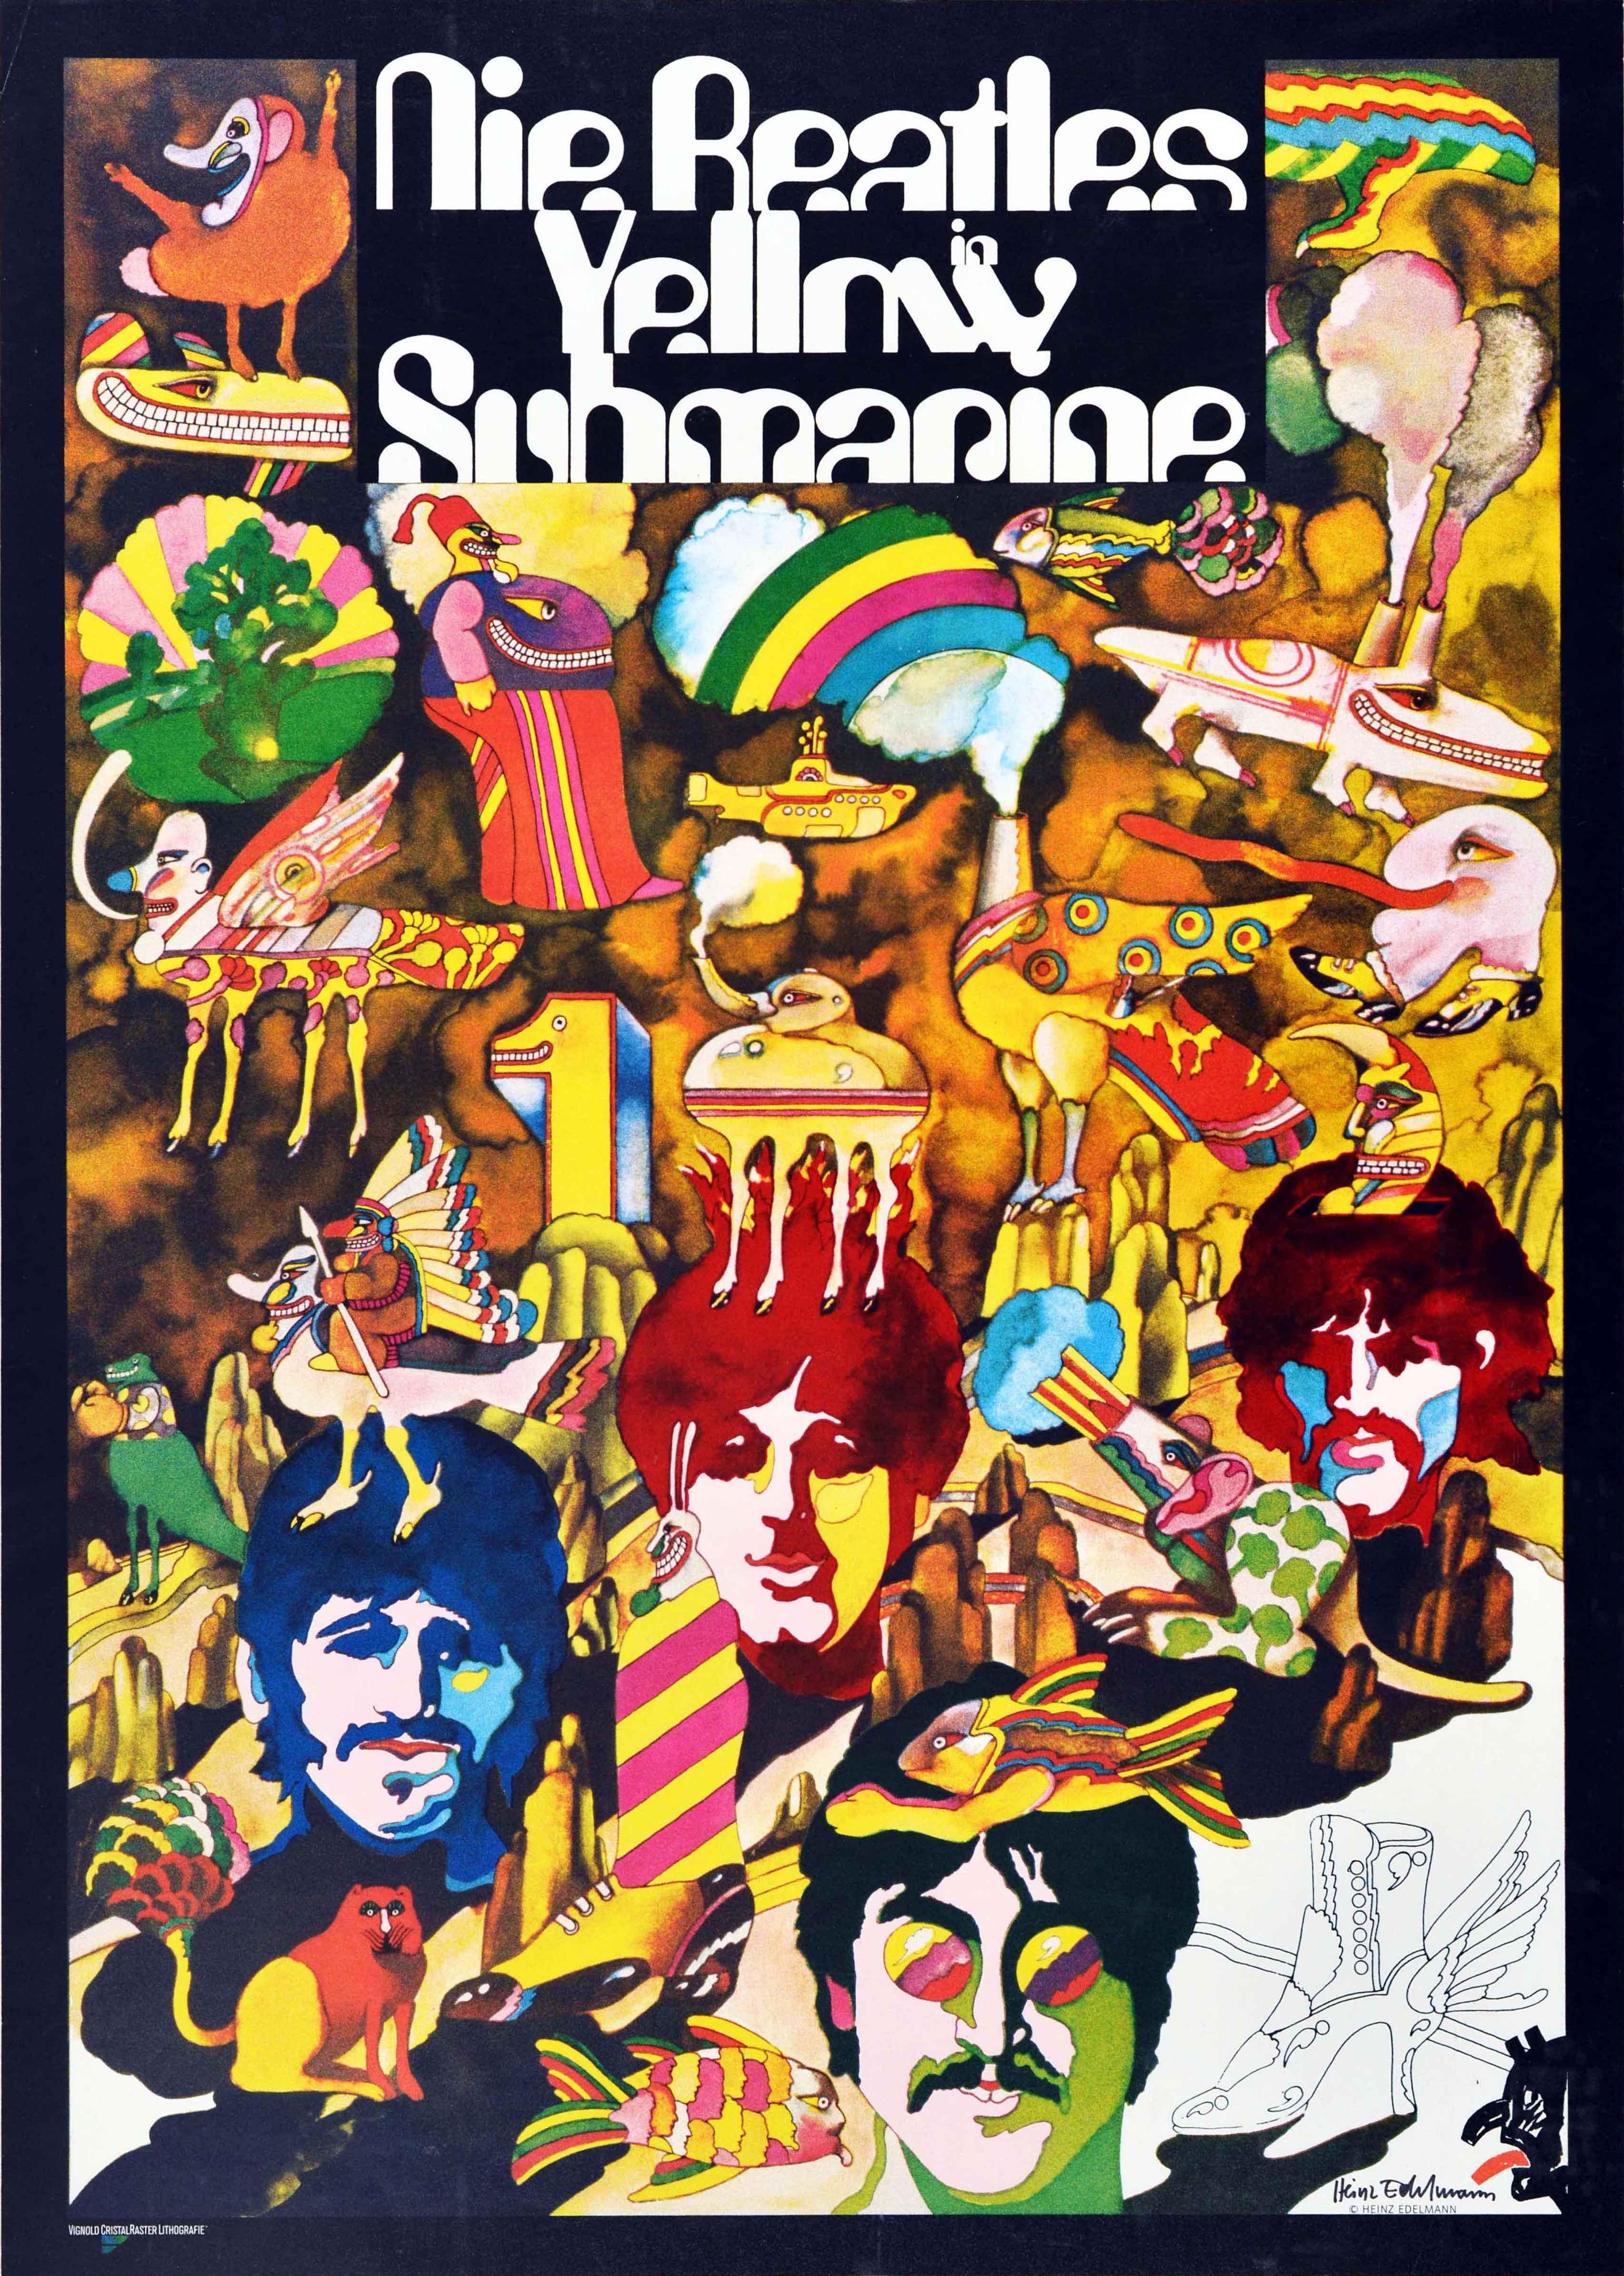 Heinz Edelmann Print - Original Vintage Animated Music Film Poster For The Beatles Yellow Submarine Art